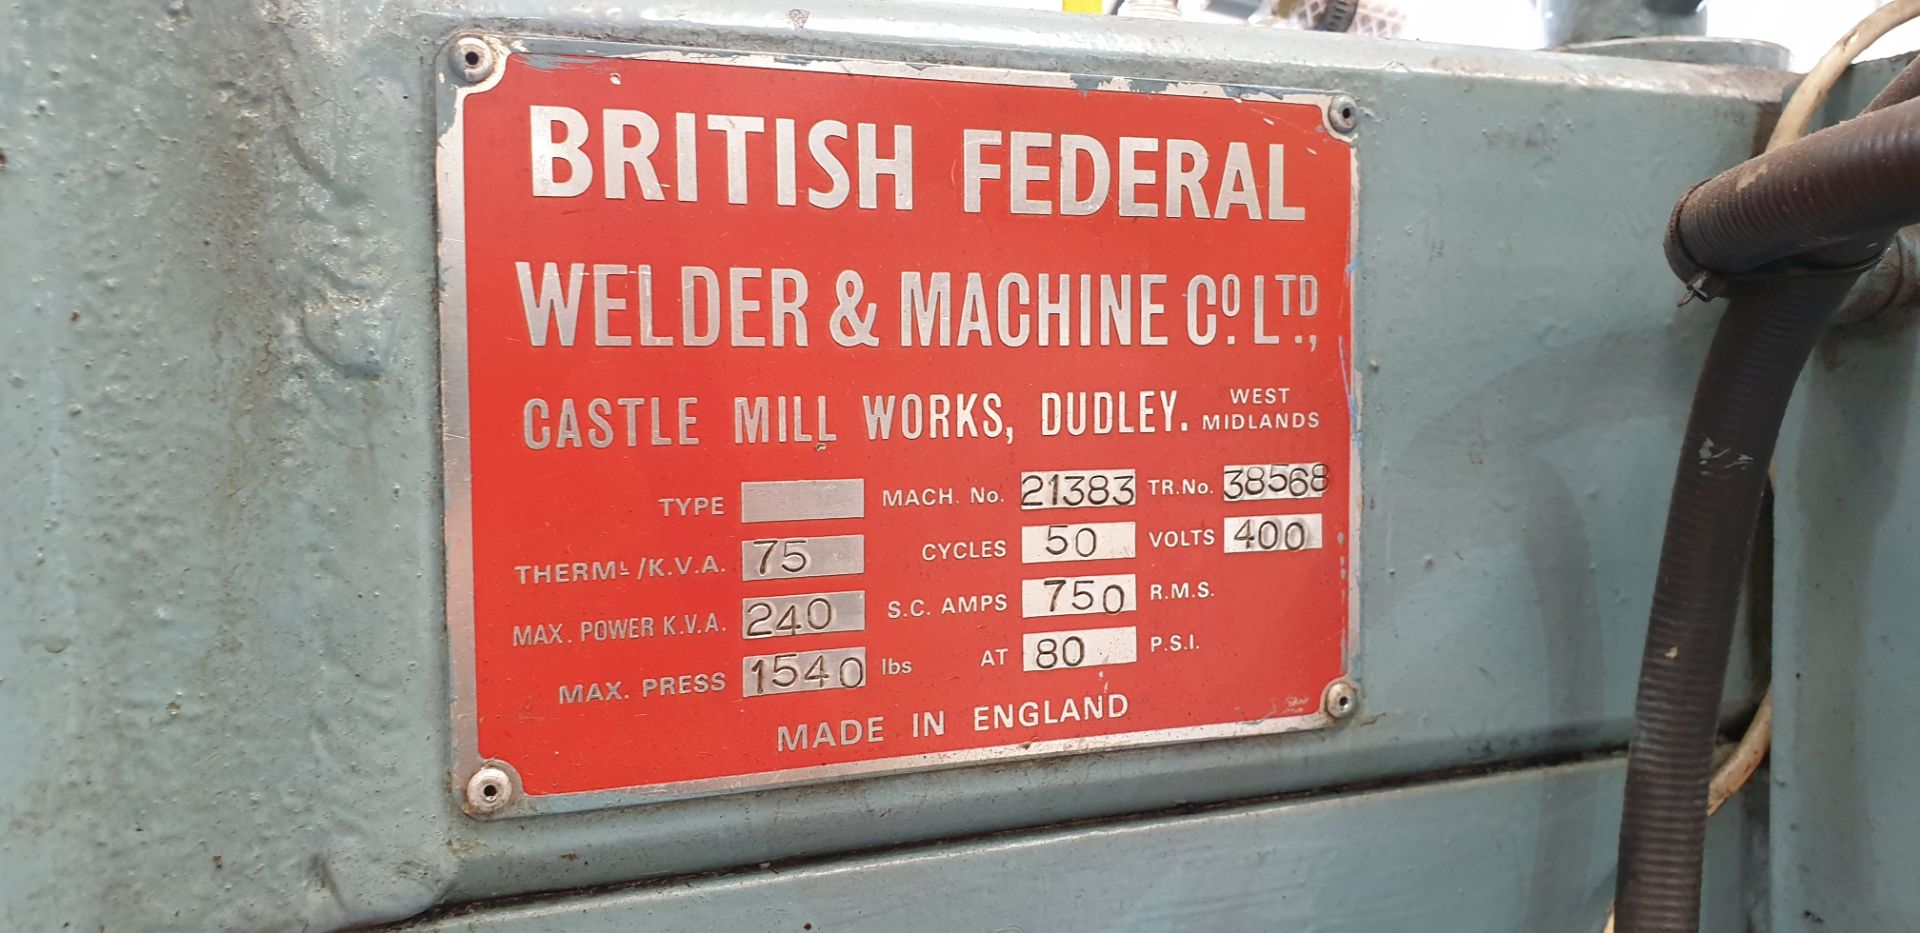 British Federal 75-Kva Rated Resistance Welder, Serial Number: 21383 - Image 2 of 2